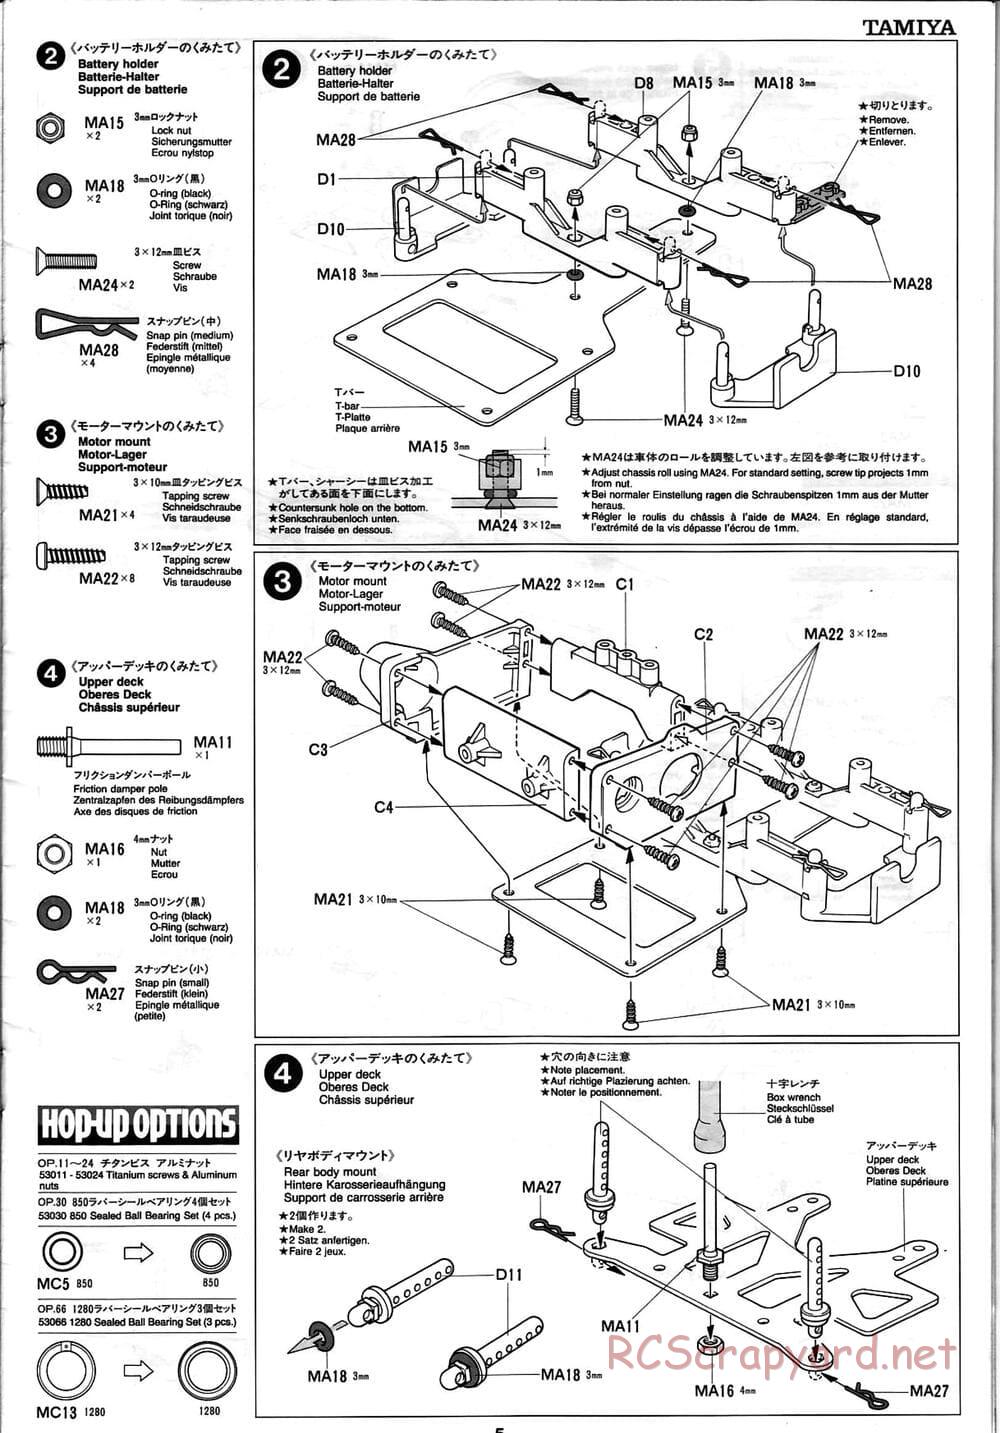 Tamiya - Ferrari F310B - F103RS Chassis - Manual - Page 5